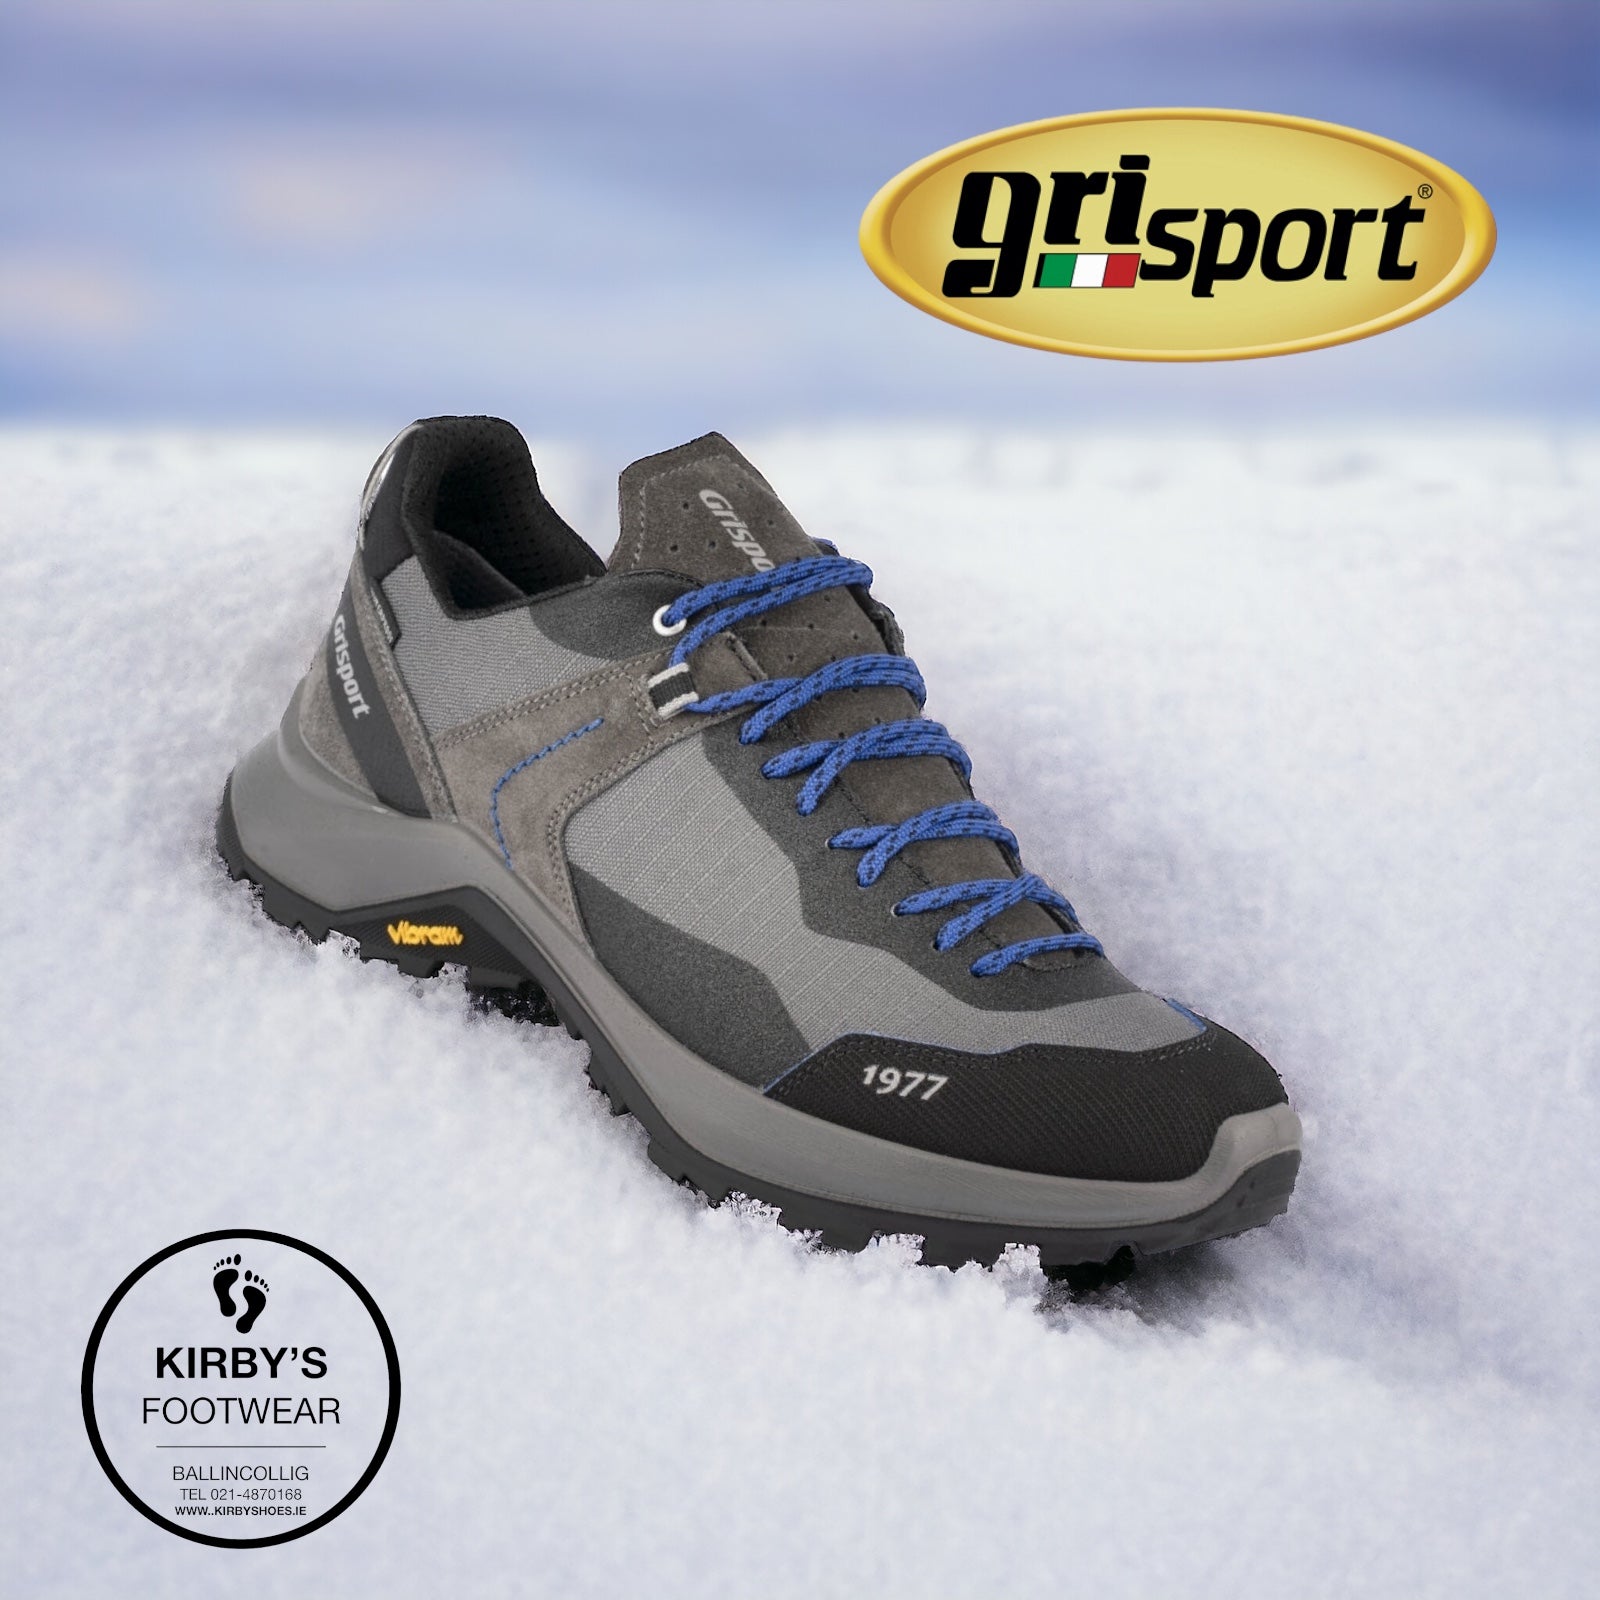 Gri Sport Trident waterproof - Kirbys Footwear Ltd